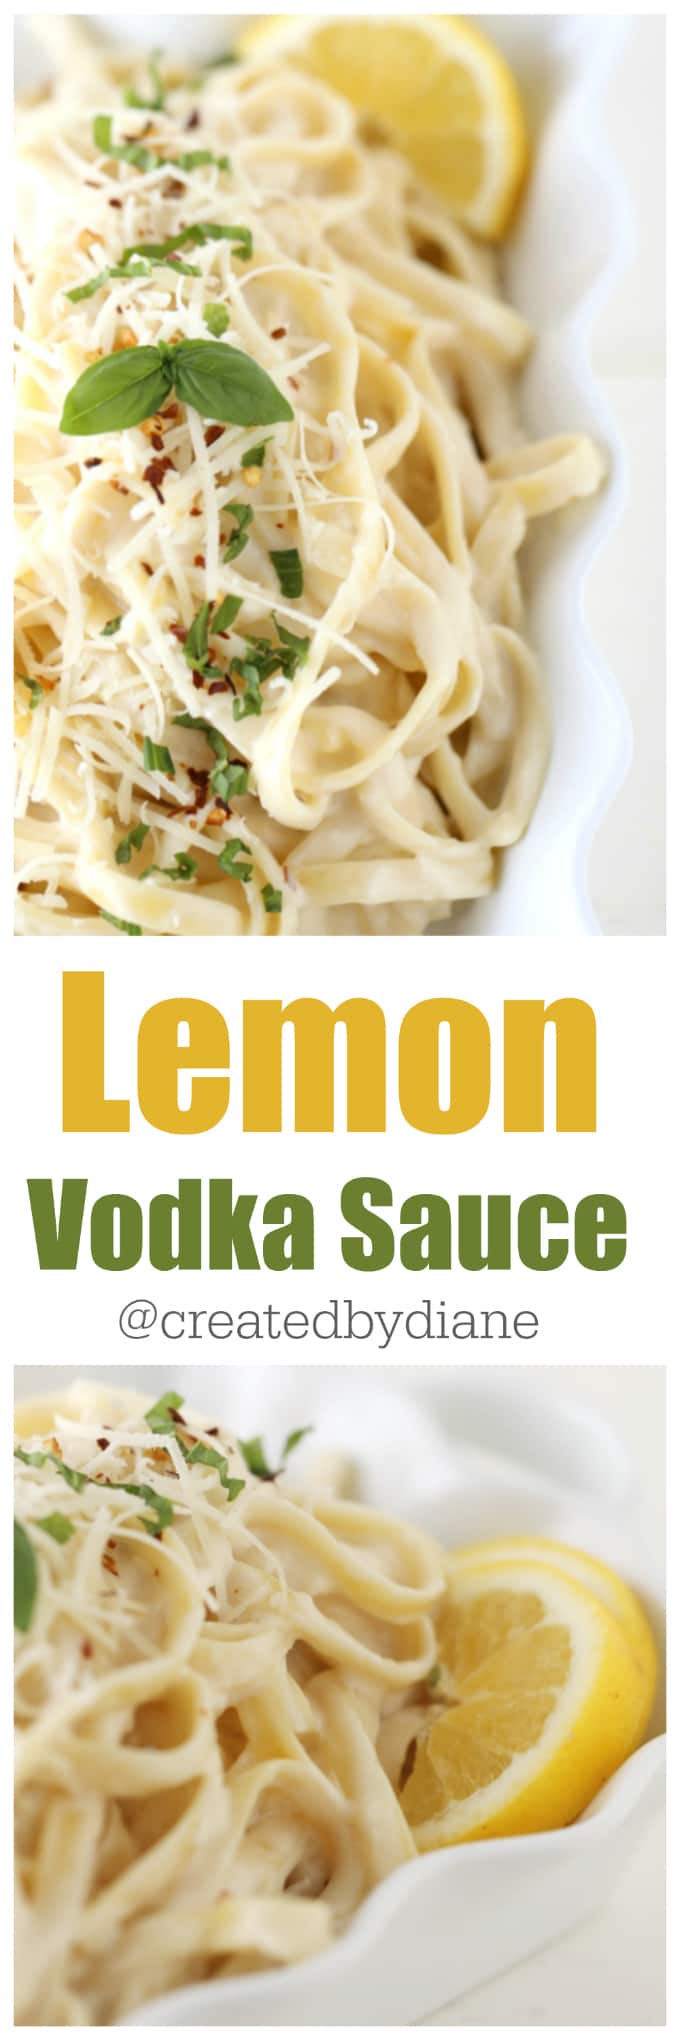 lemon-vodka-sauce-recipe-from-createdbydiane